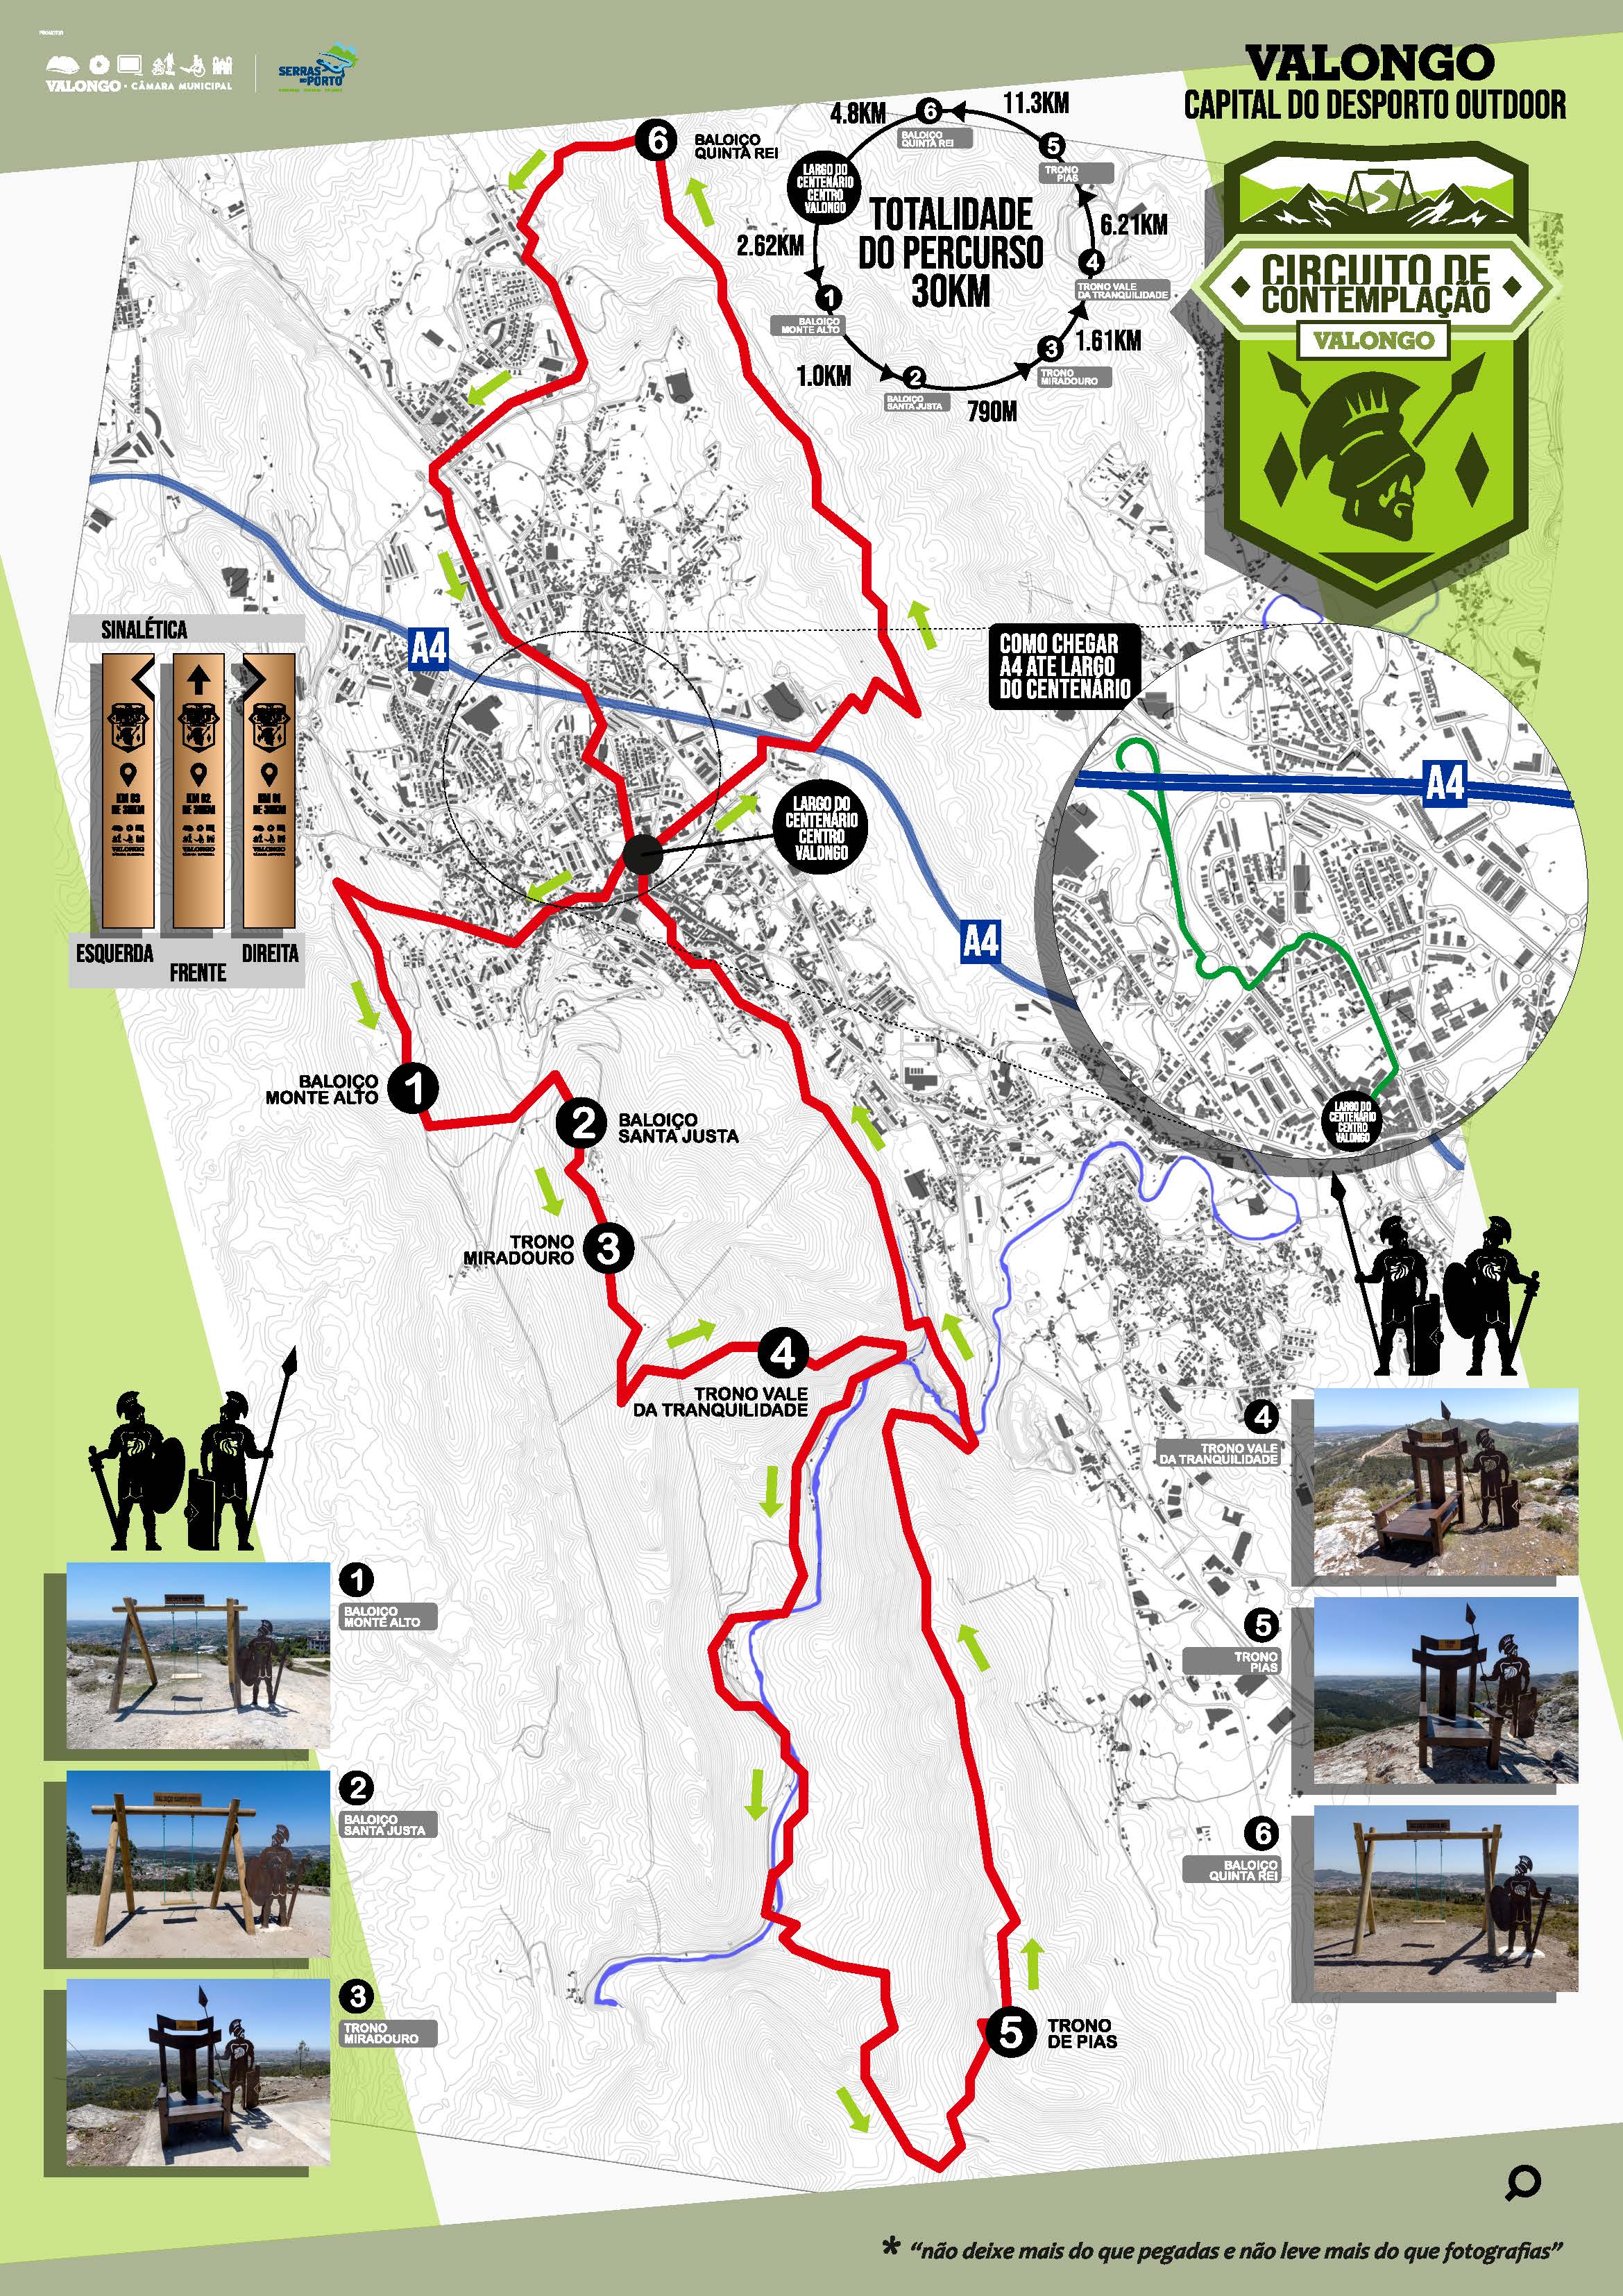 trail map